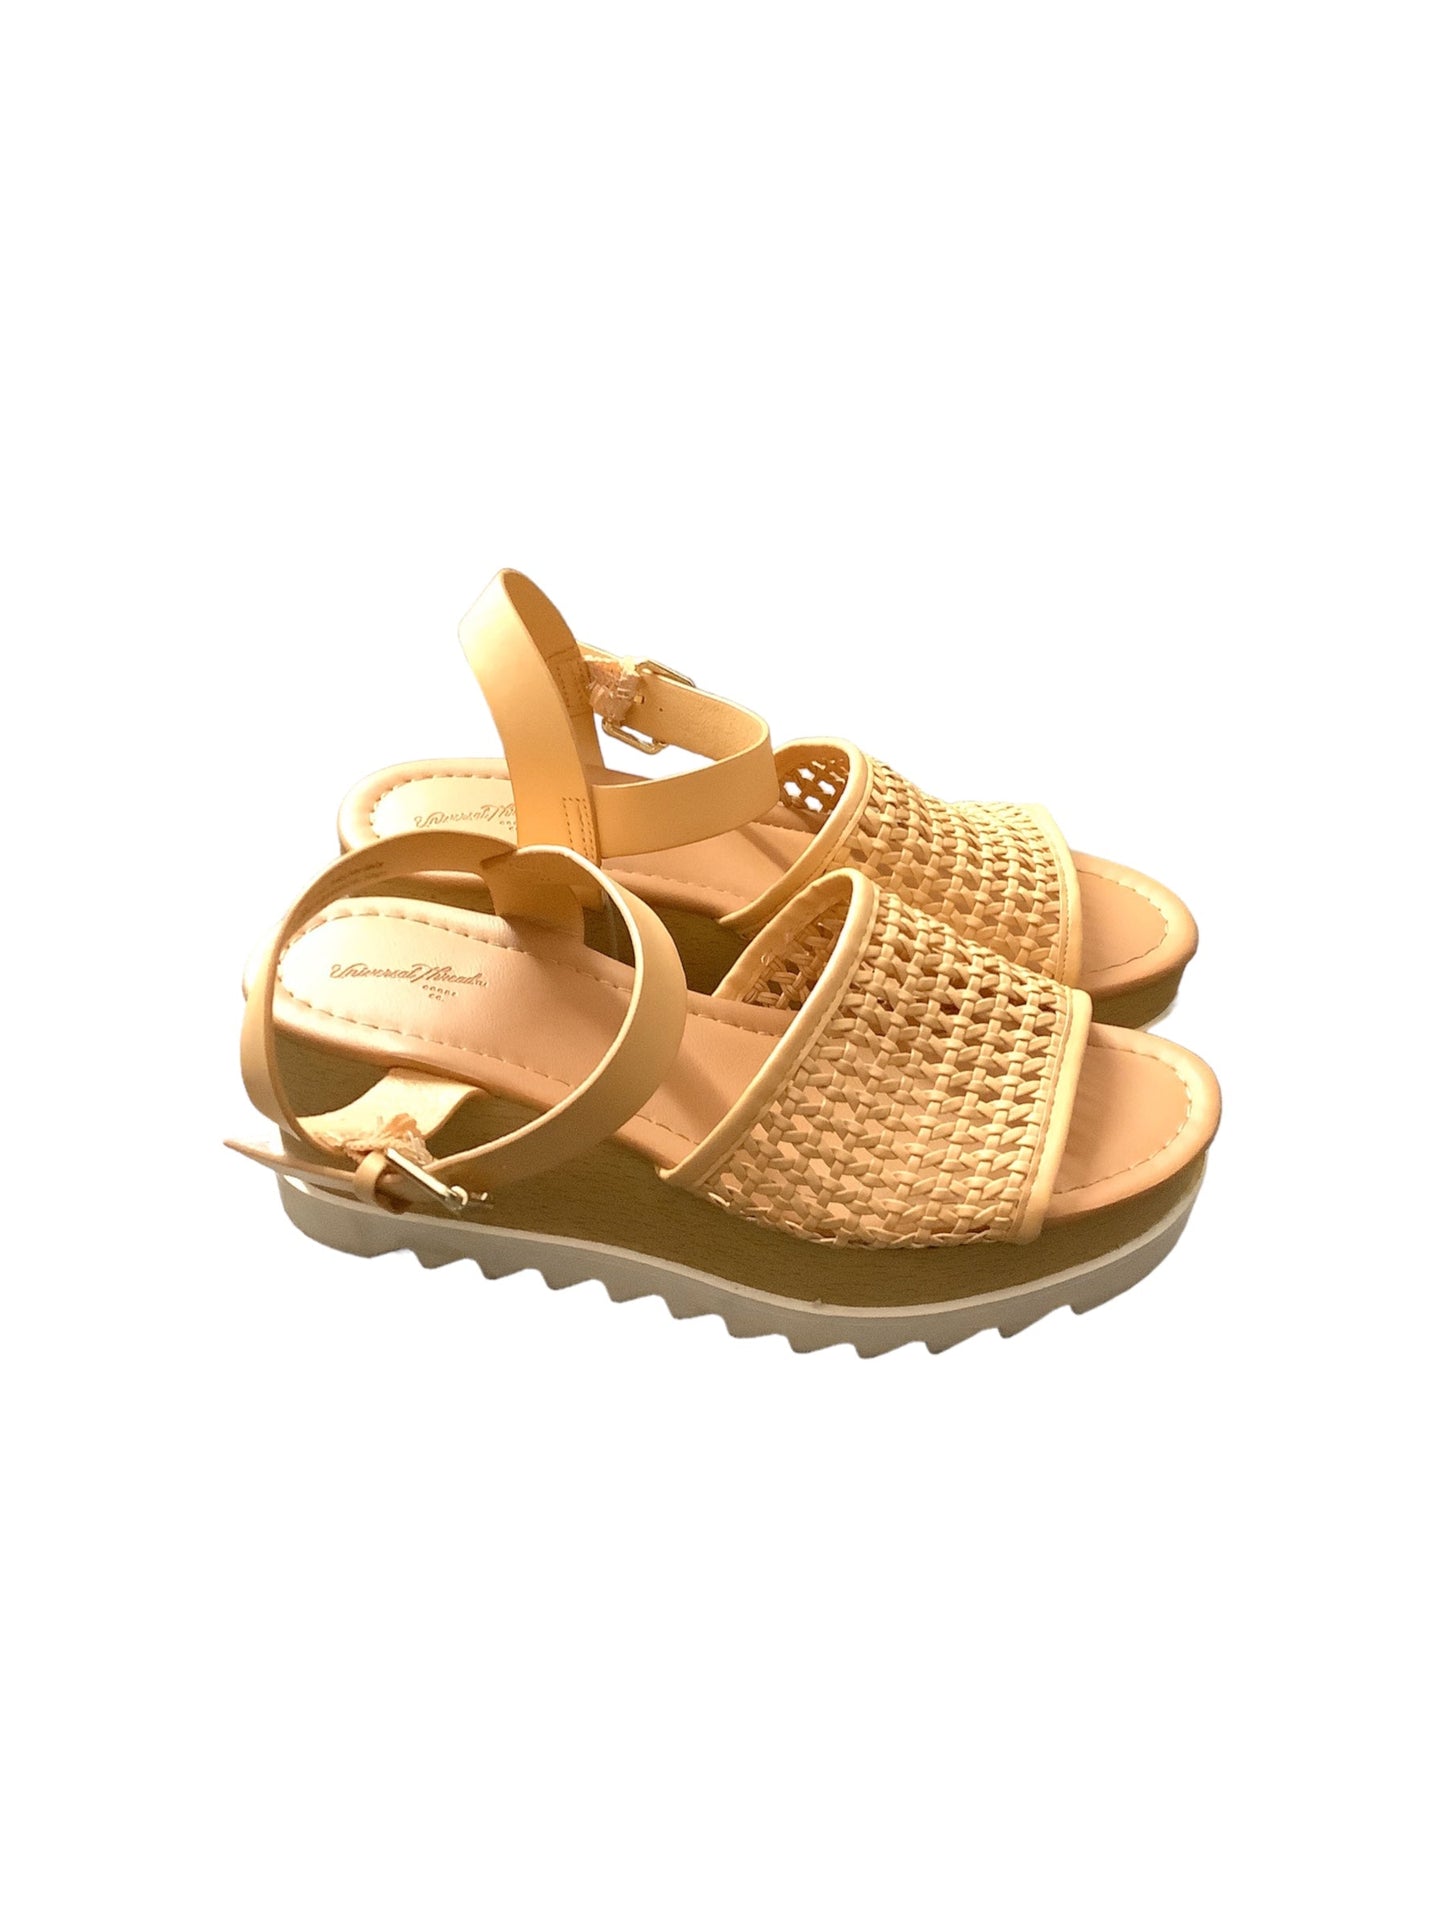 Tan Sandals Heels Platform Universal Thread, Size 8